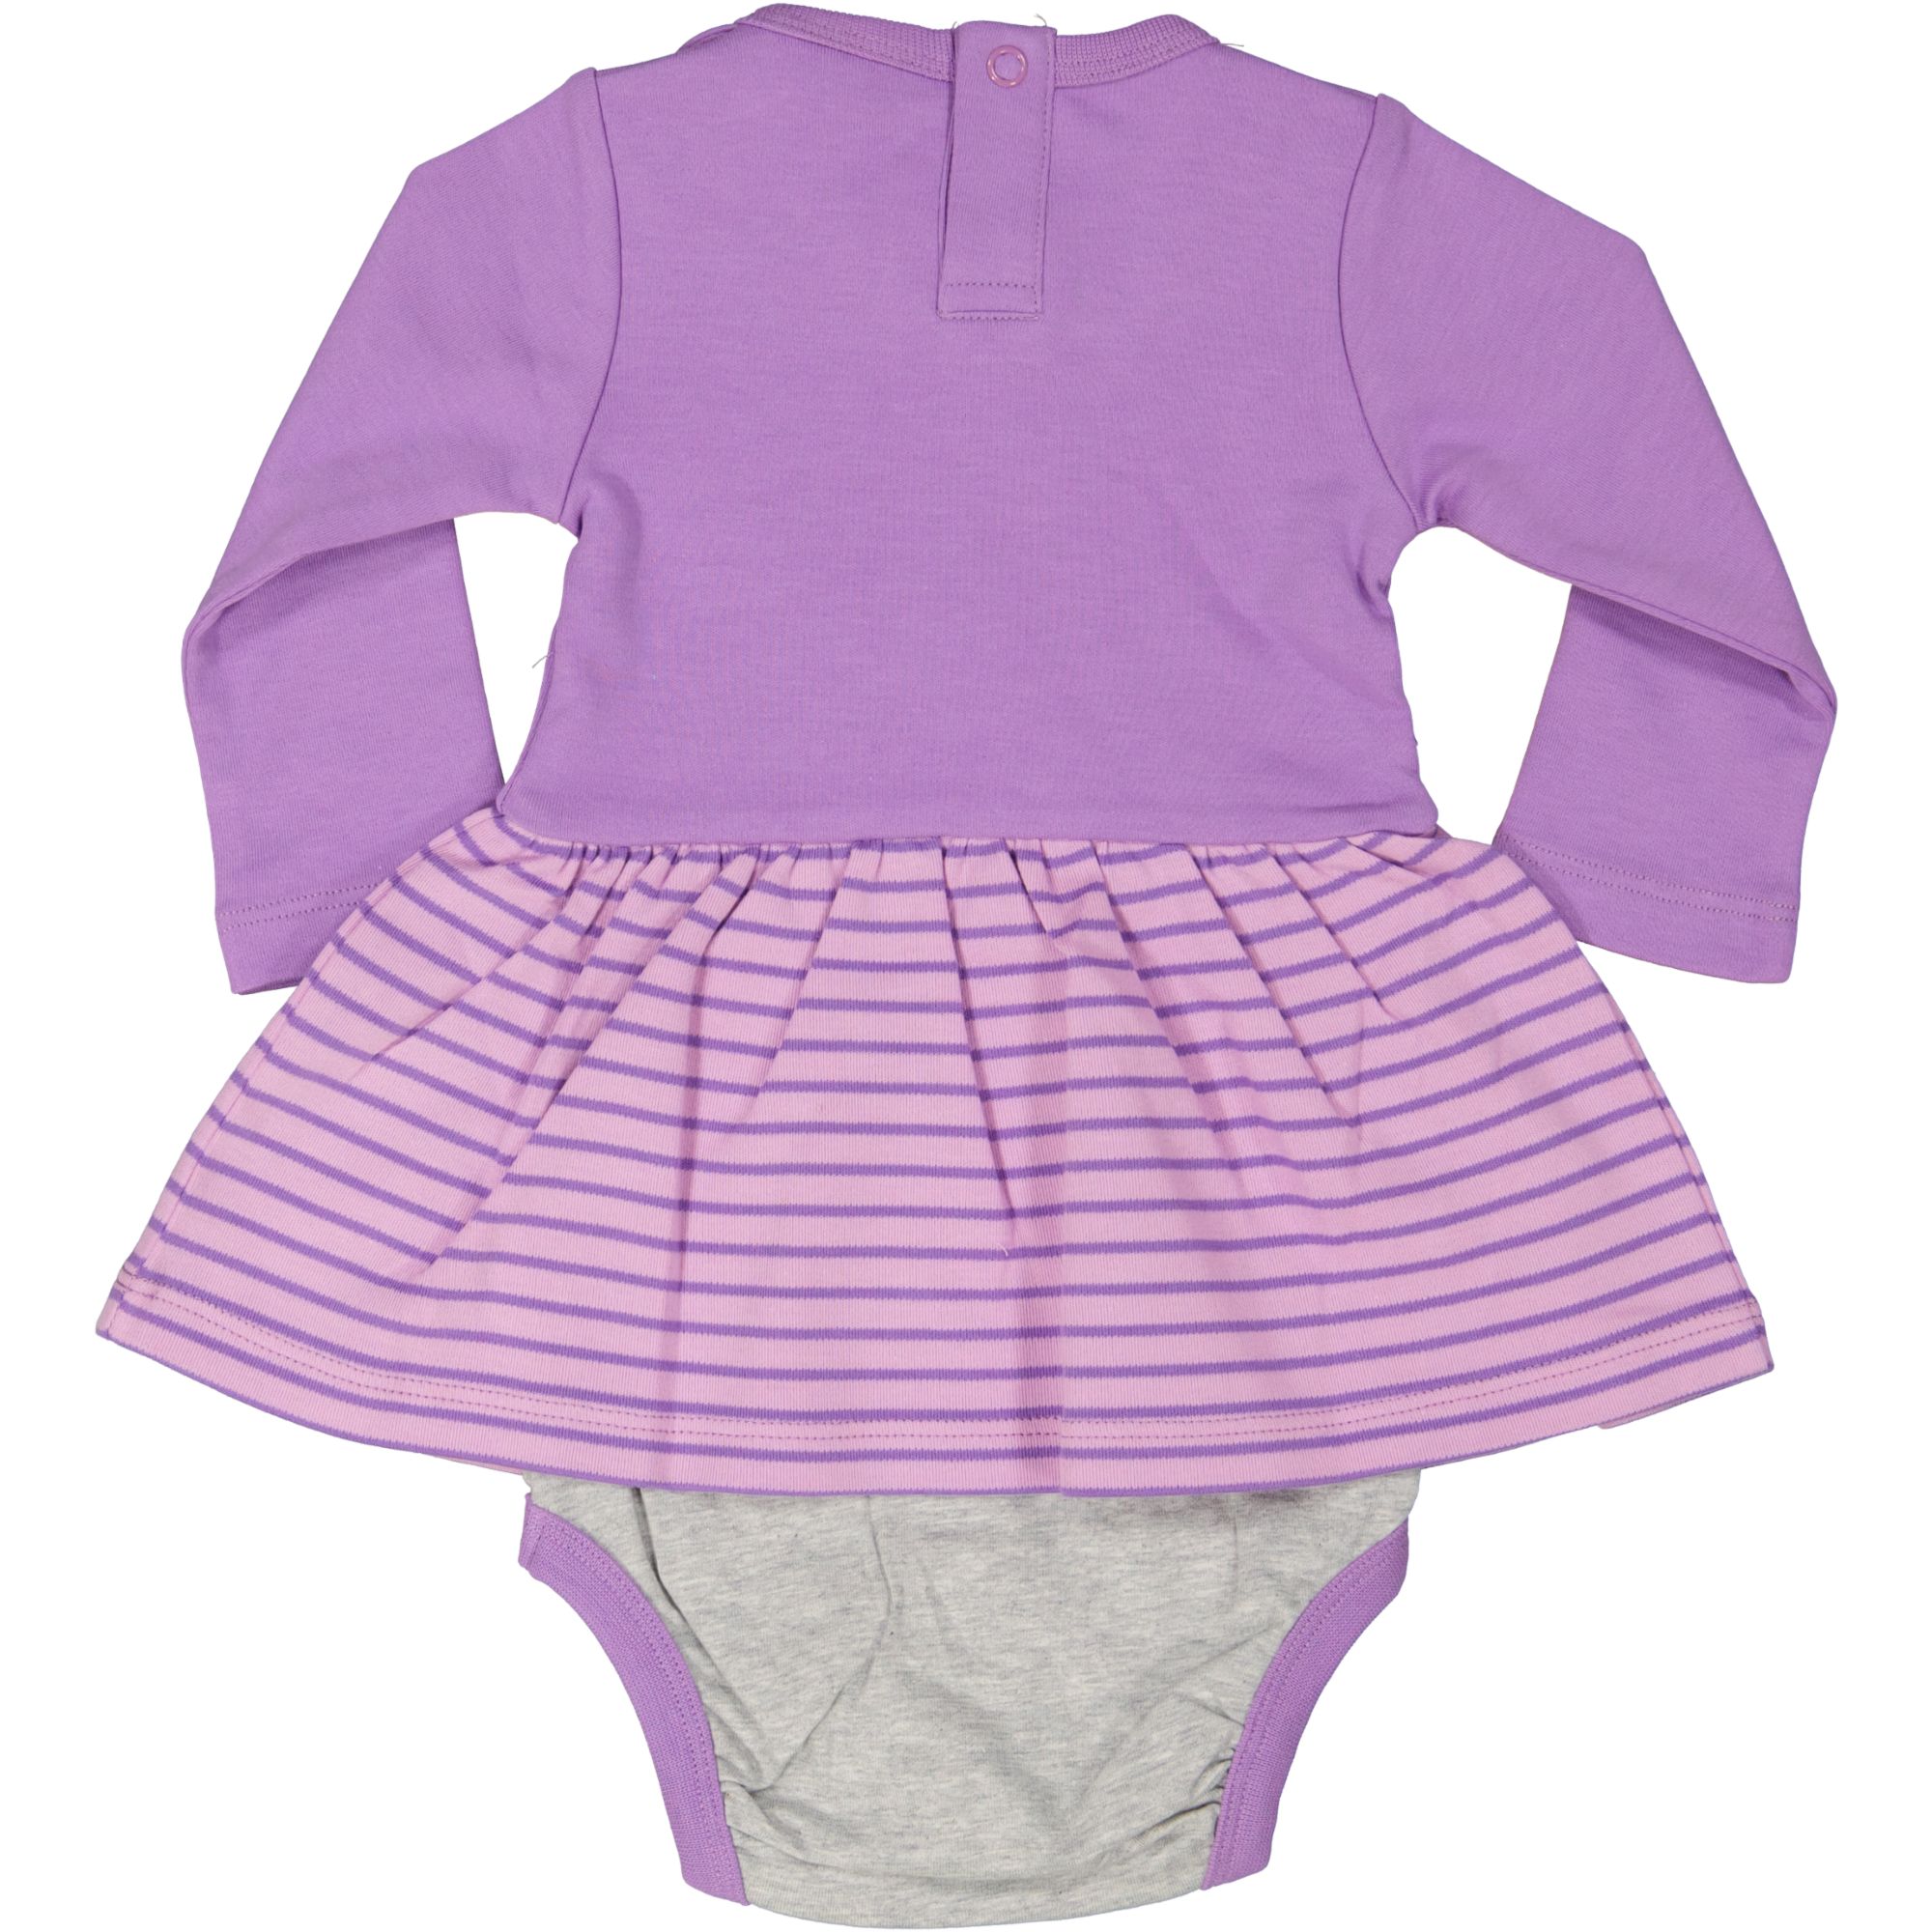 Body dress L.purple/purple 16